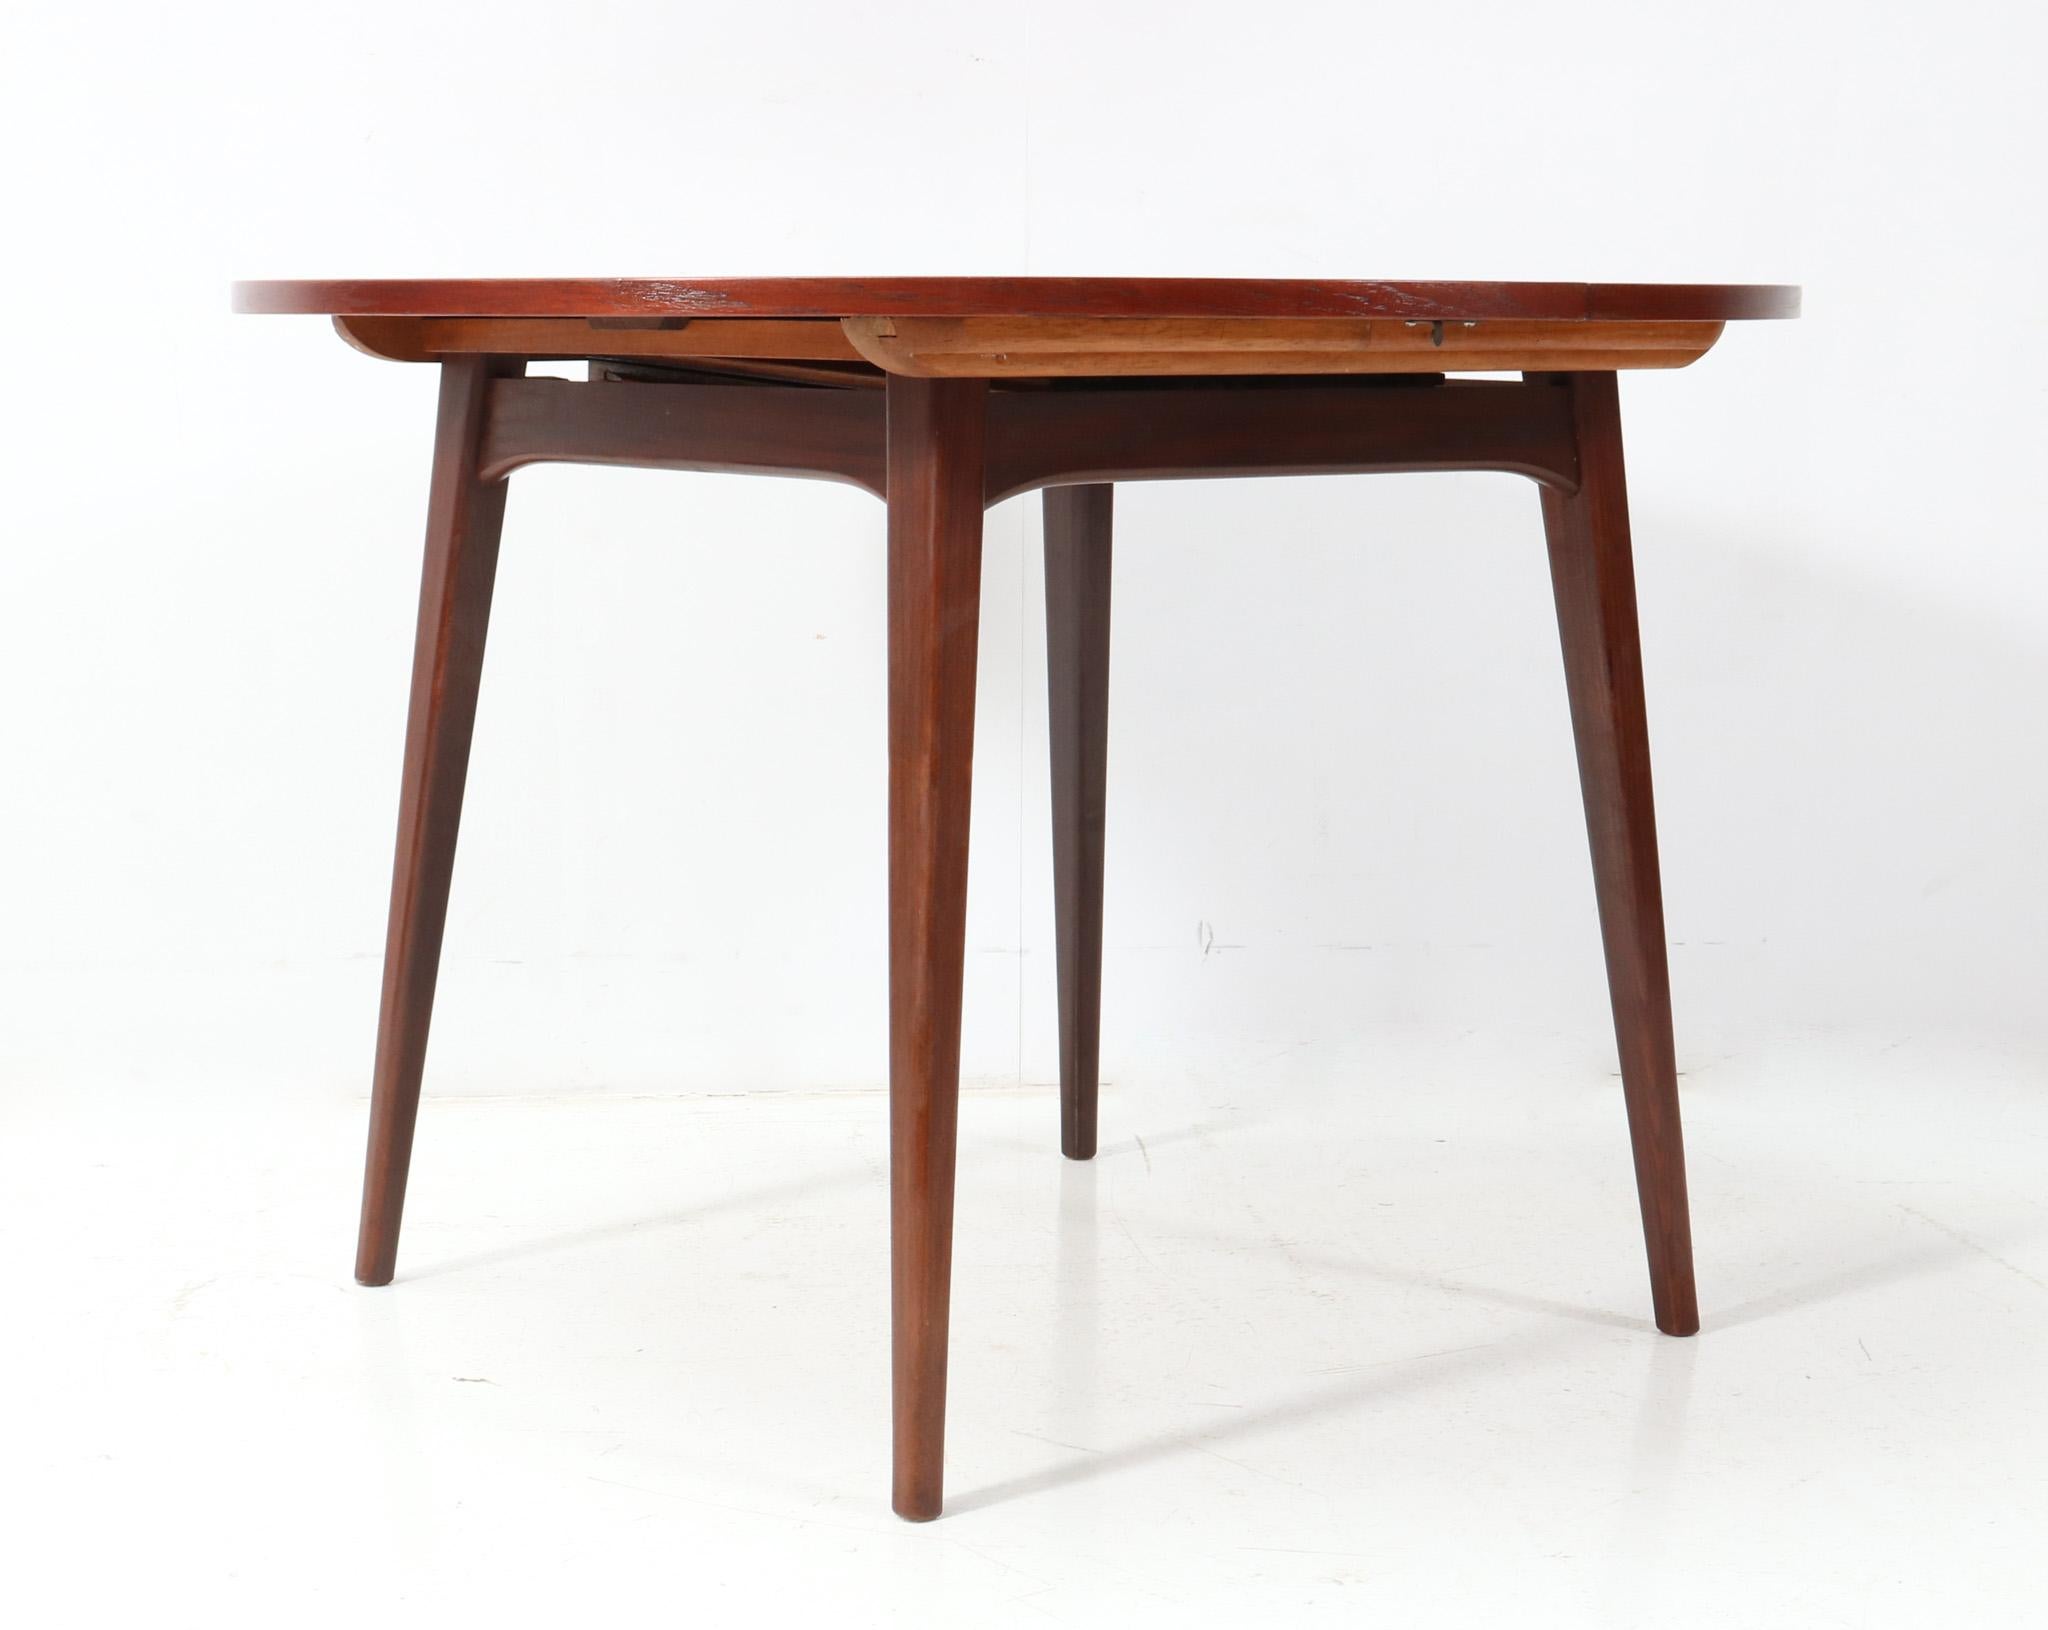 Mid-20th Century Teak Mid-Century Modern Extendable Dining Table by Louis van Teeffelen, 1950s For Sale